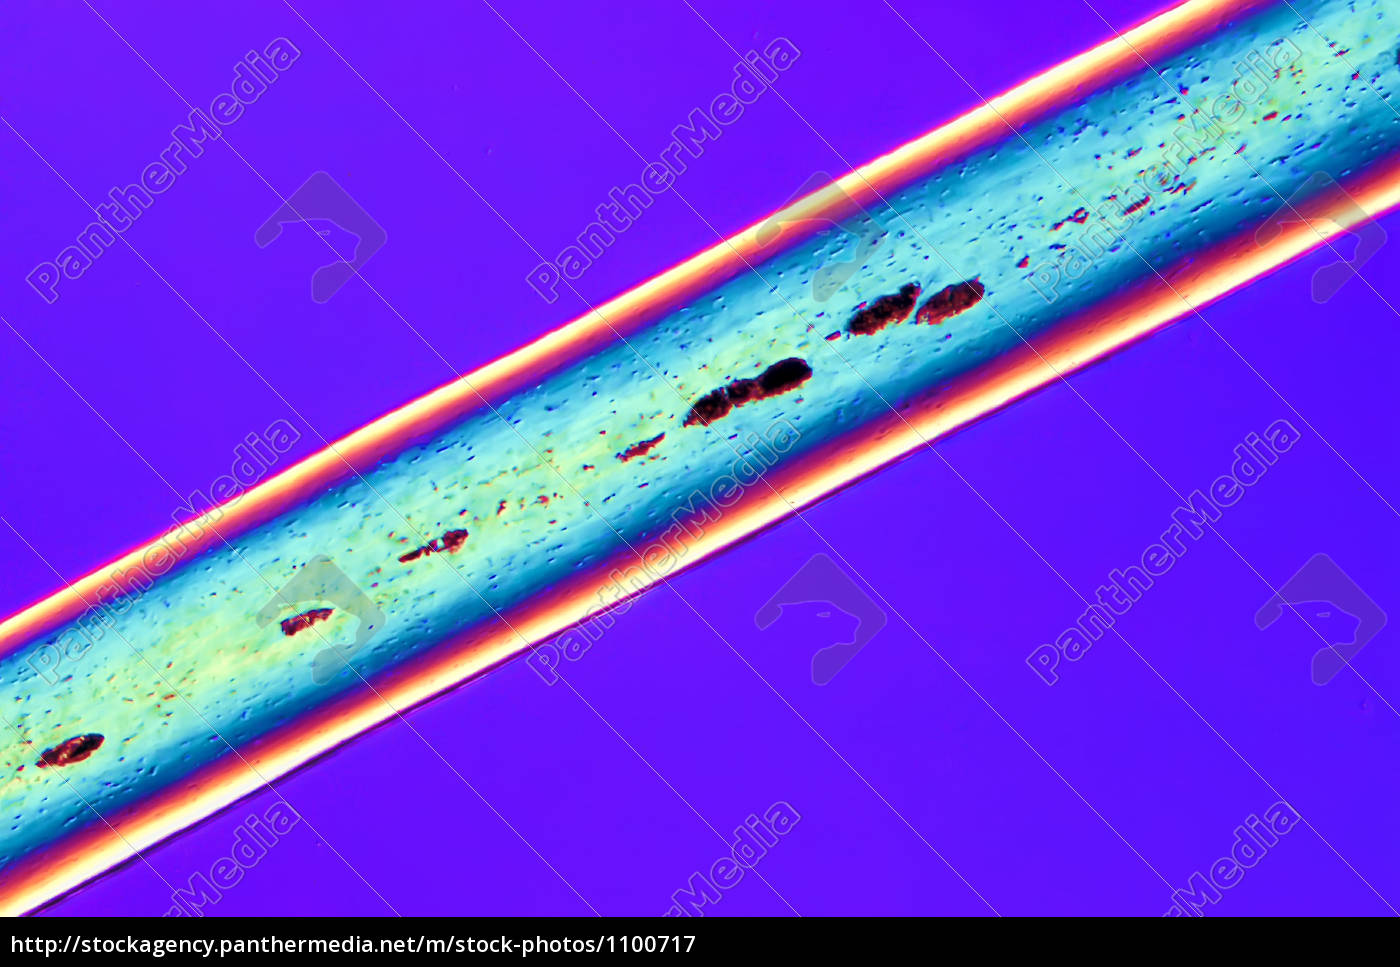 human hair microscopic - Stock Photo 